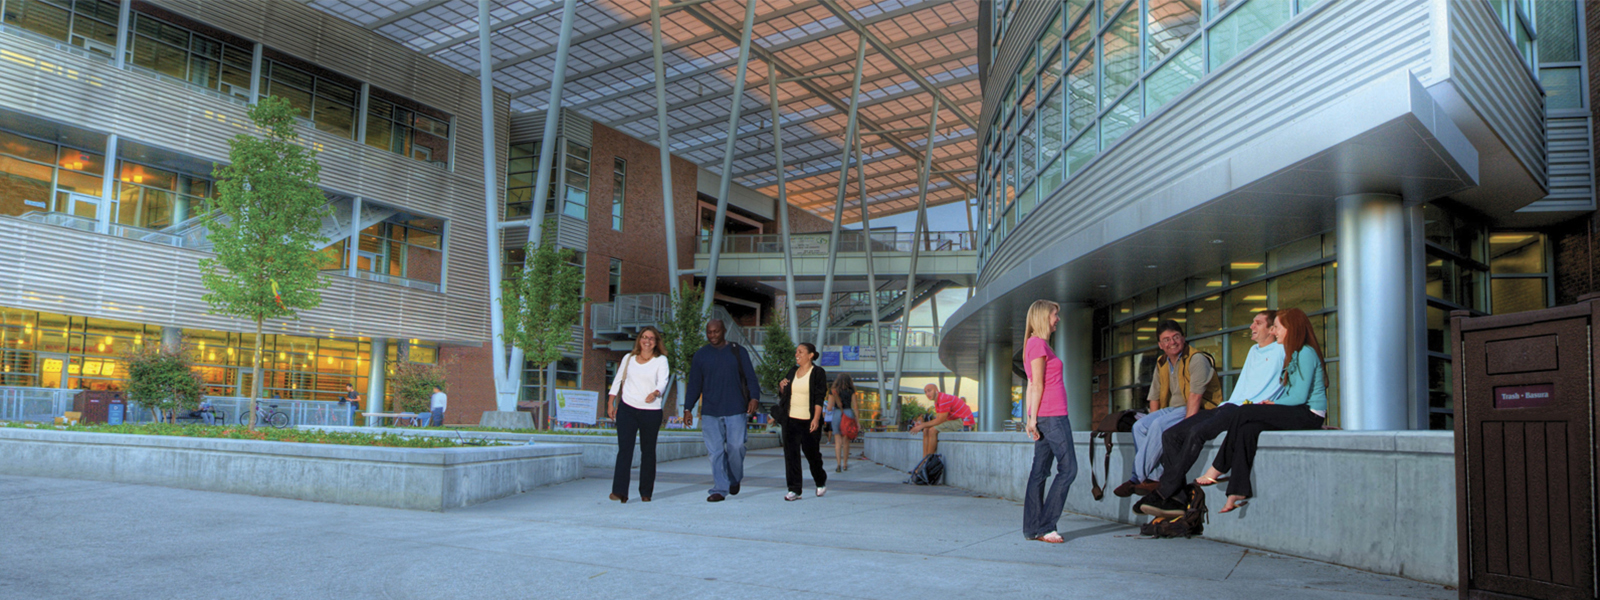 Students stroll through the Student Union atrium.